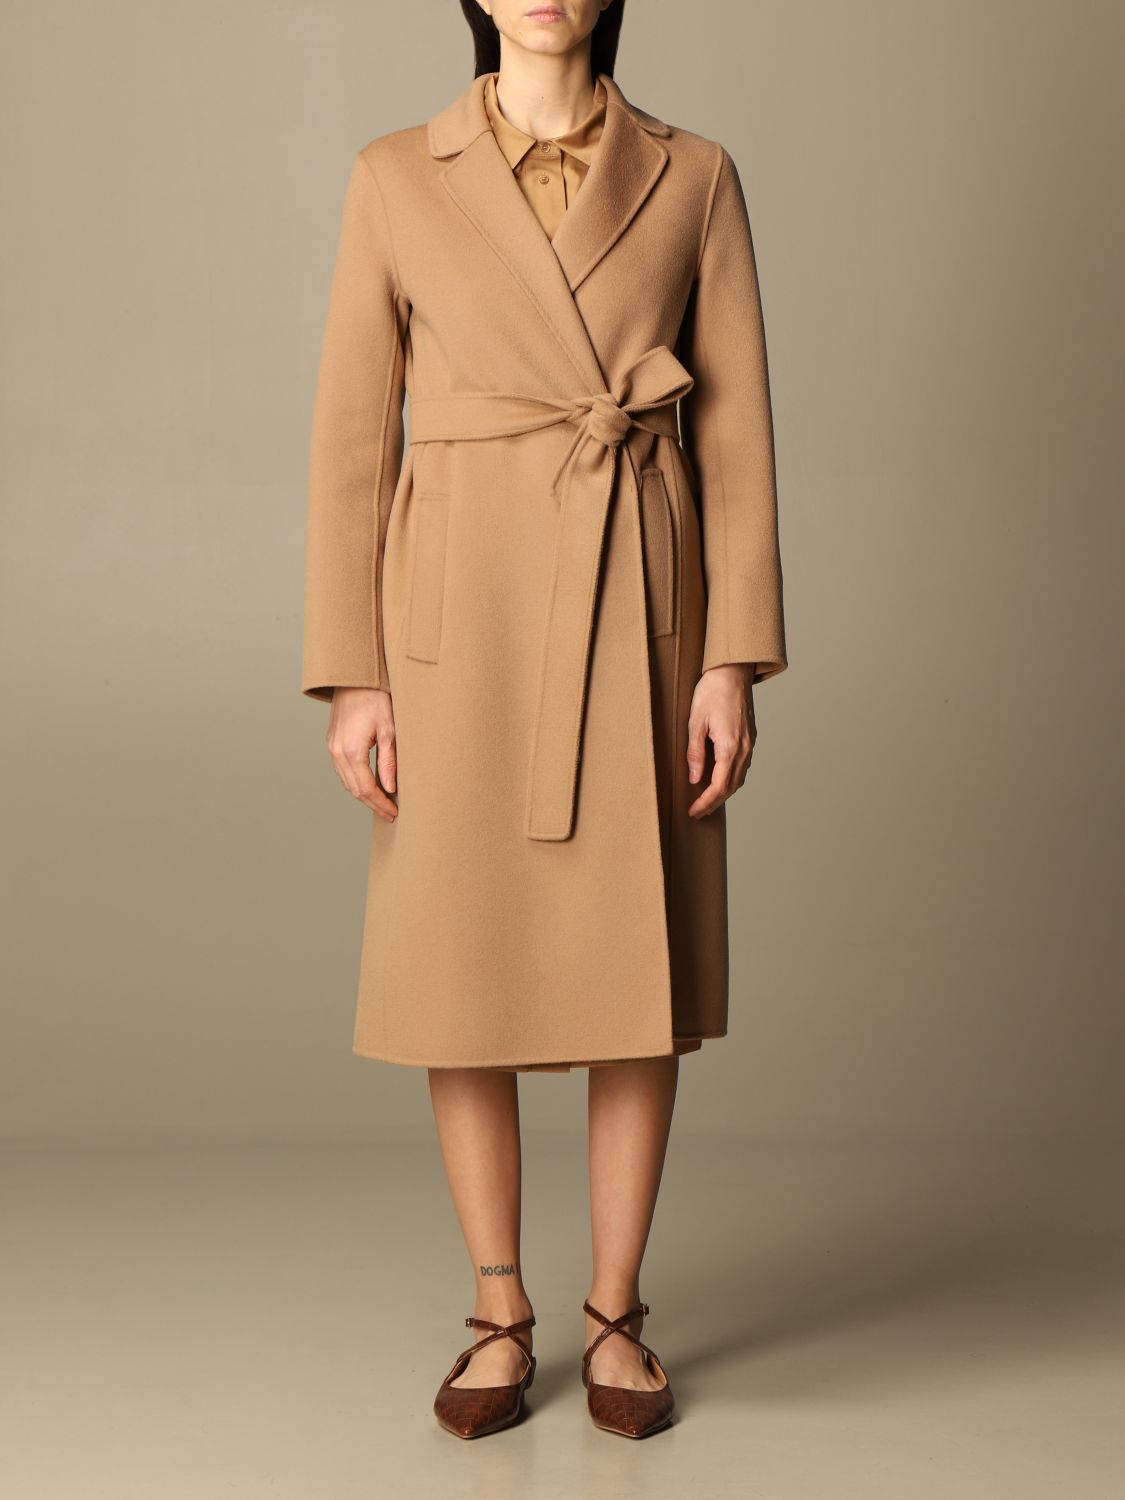 S MAX MARA: Pauline coat in virgin wool - Camel | S Max Mara coat